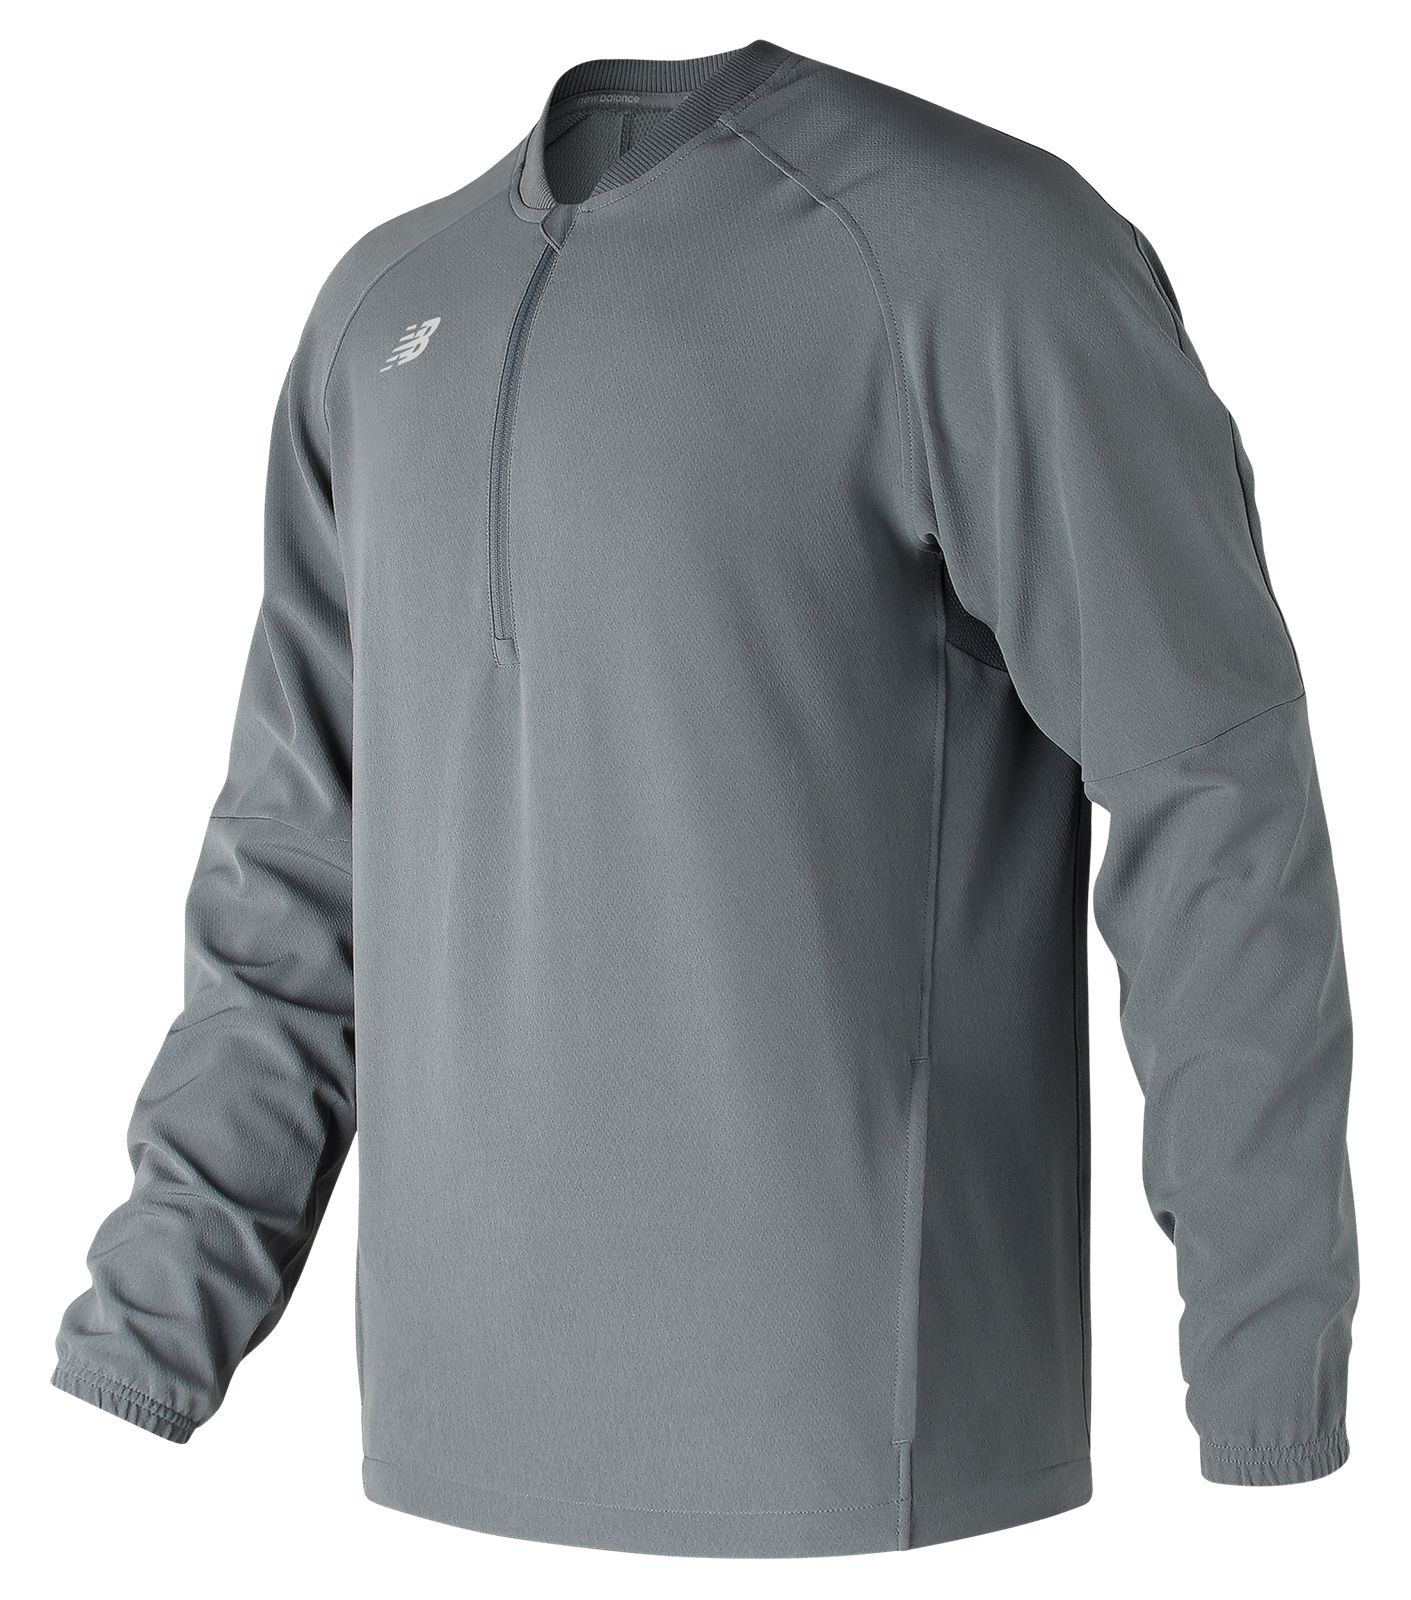 Full Sleeve Unisex Travel Hoodie Jackets 5XL / Grey